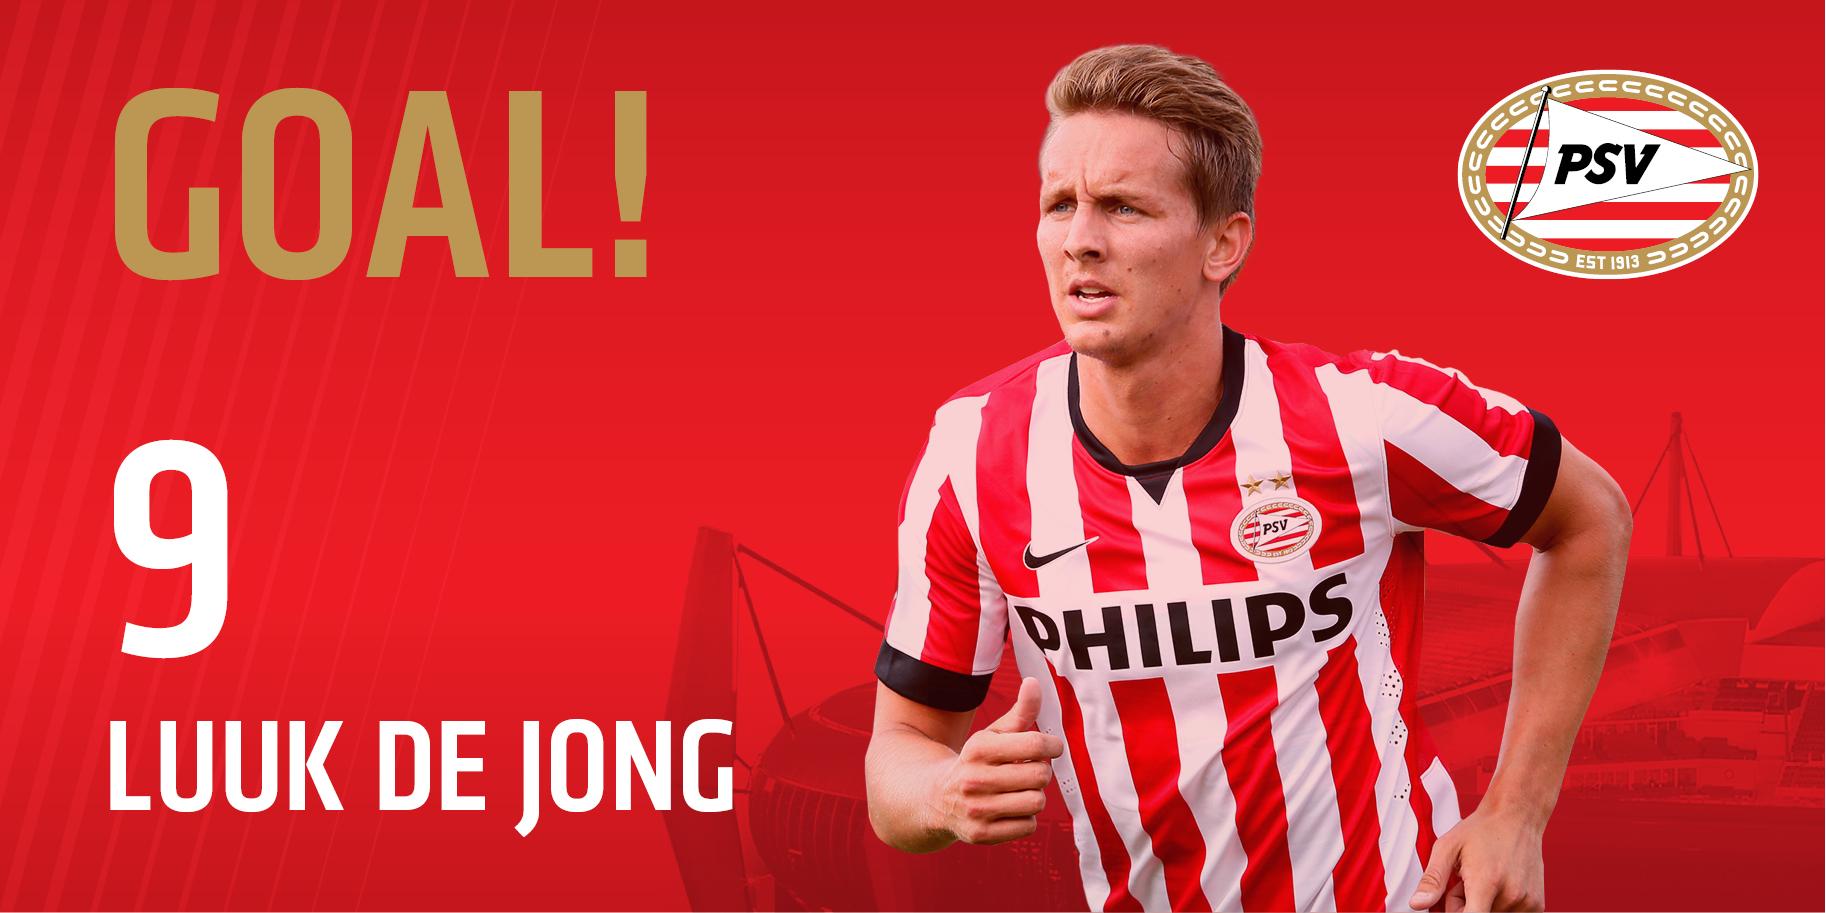 PSV GOAL GOAL LUUK DE JONG!!!